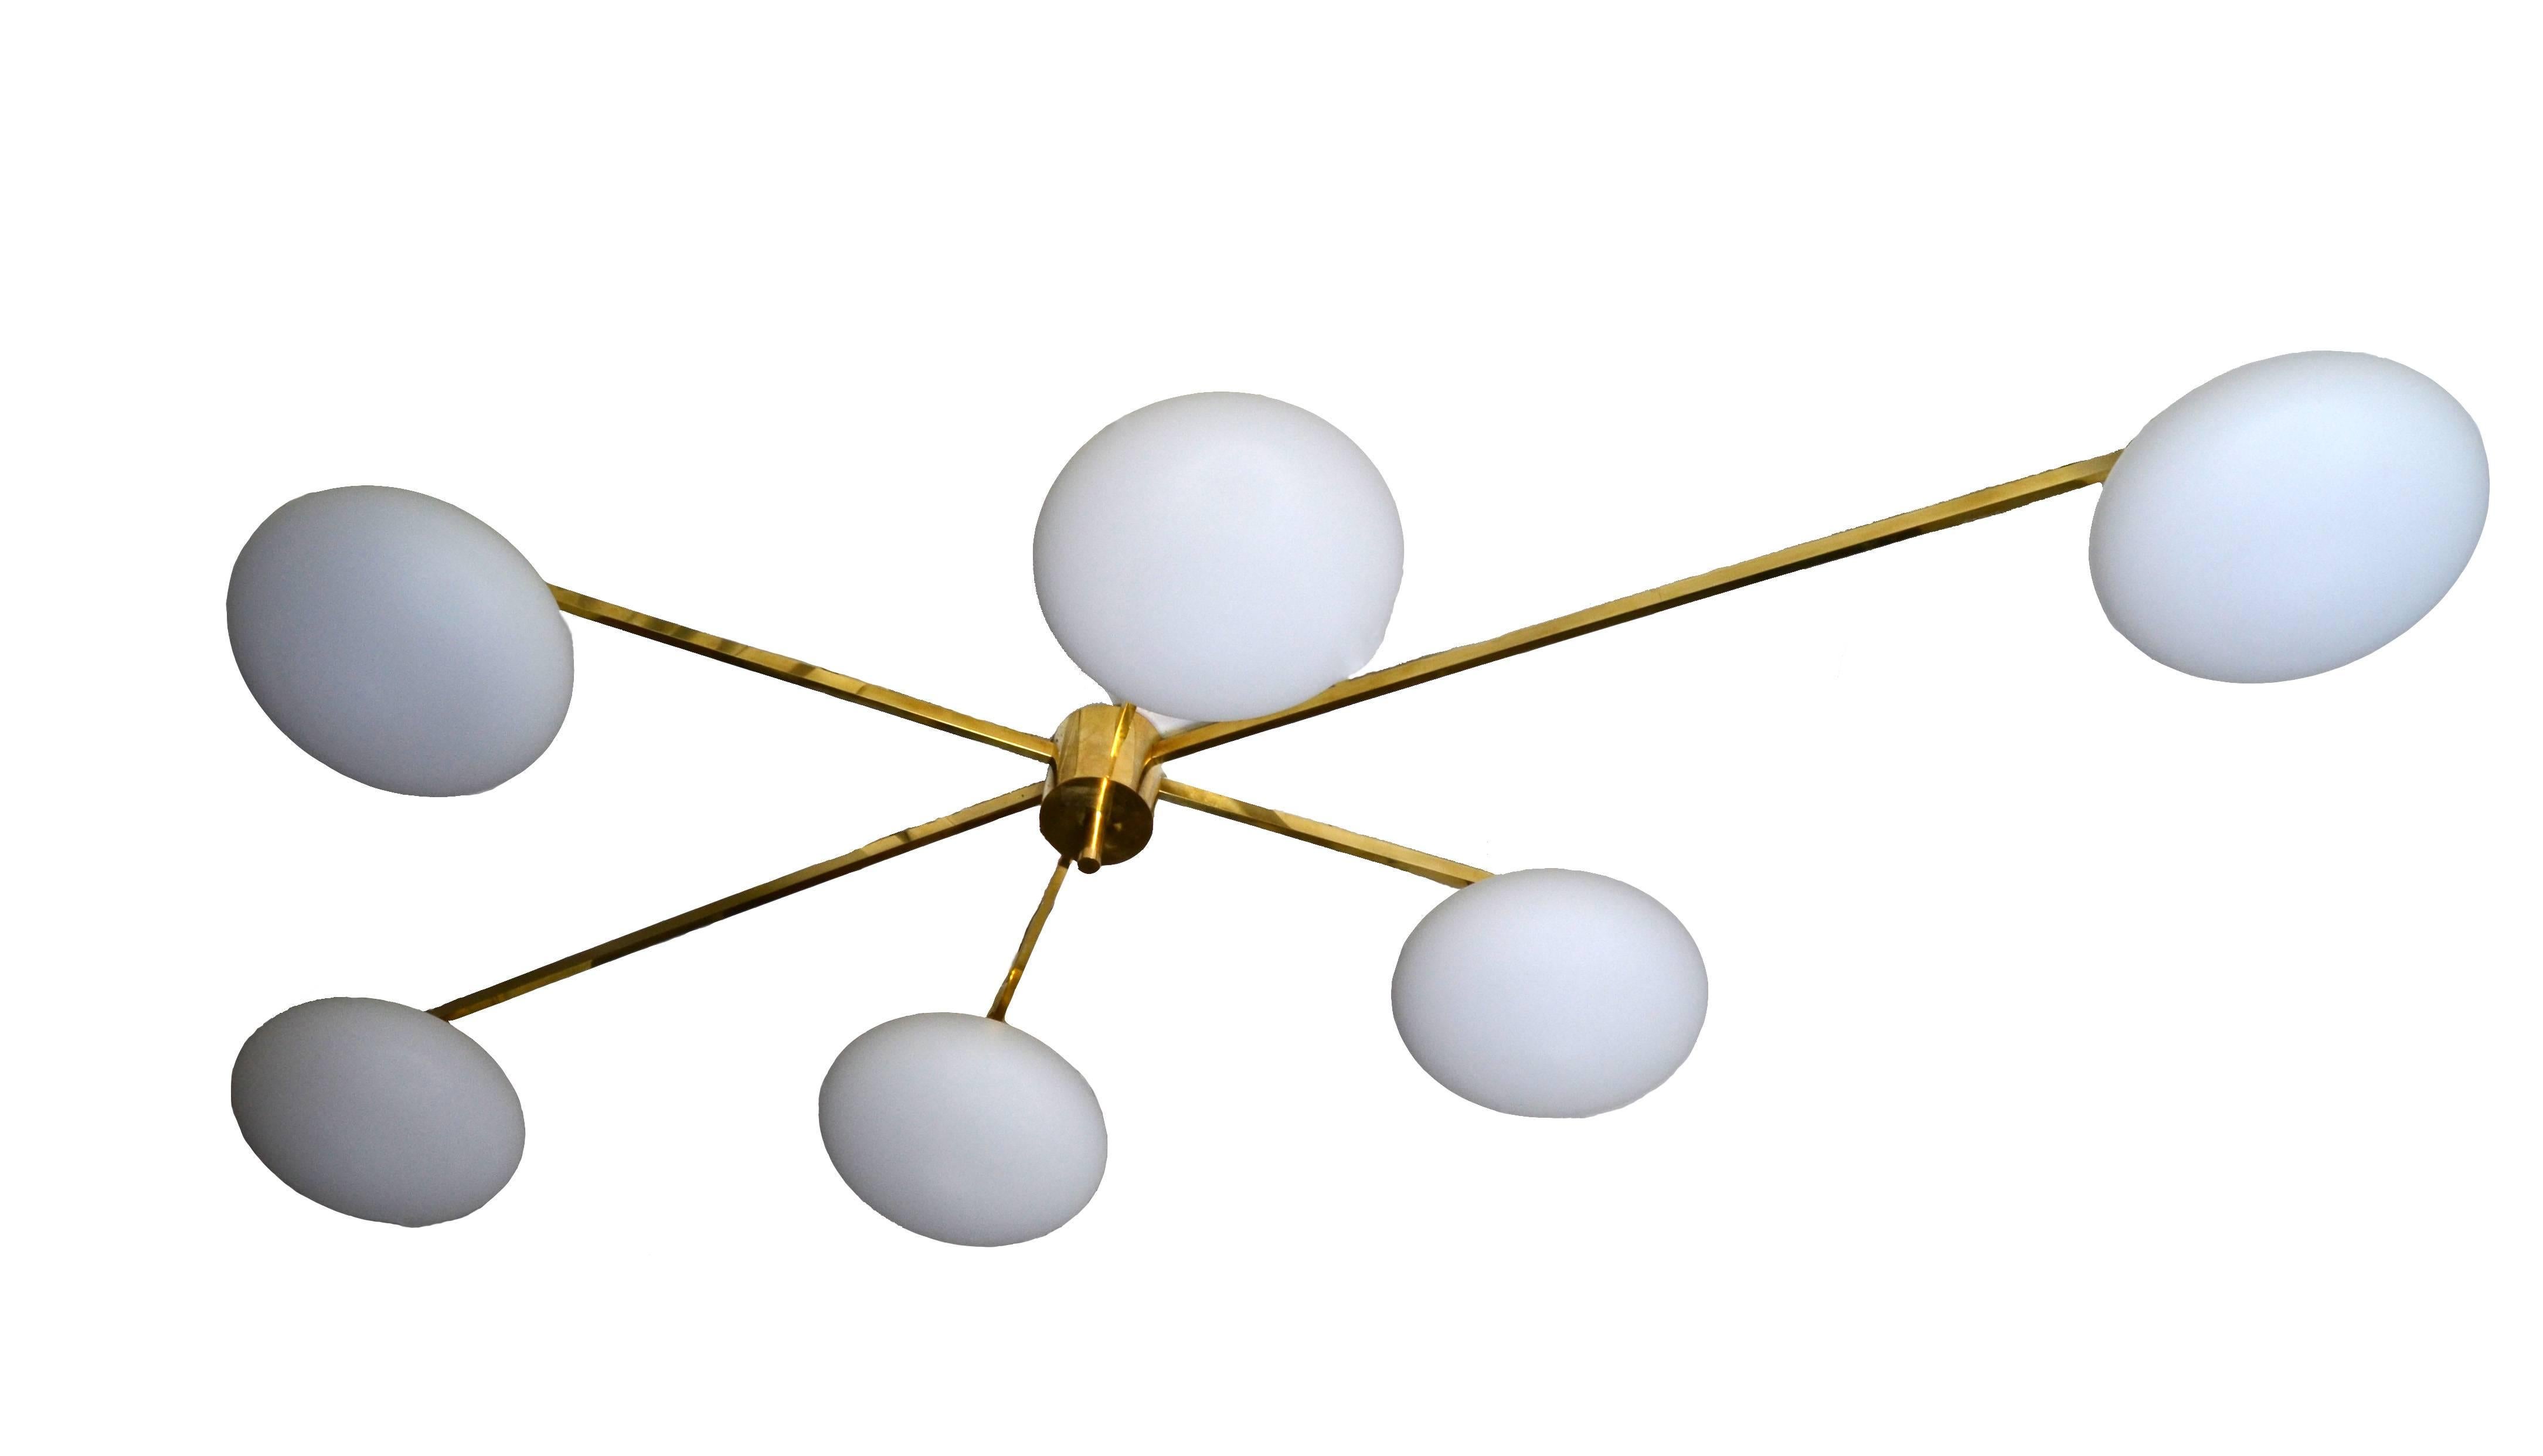 Modern cool Italian asymmetric brass chandelier with six opaline glass globes.

Uses six round max. 40 wattage light bulbs.